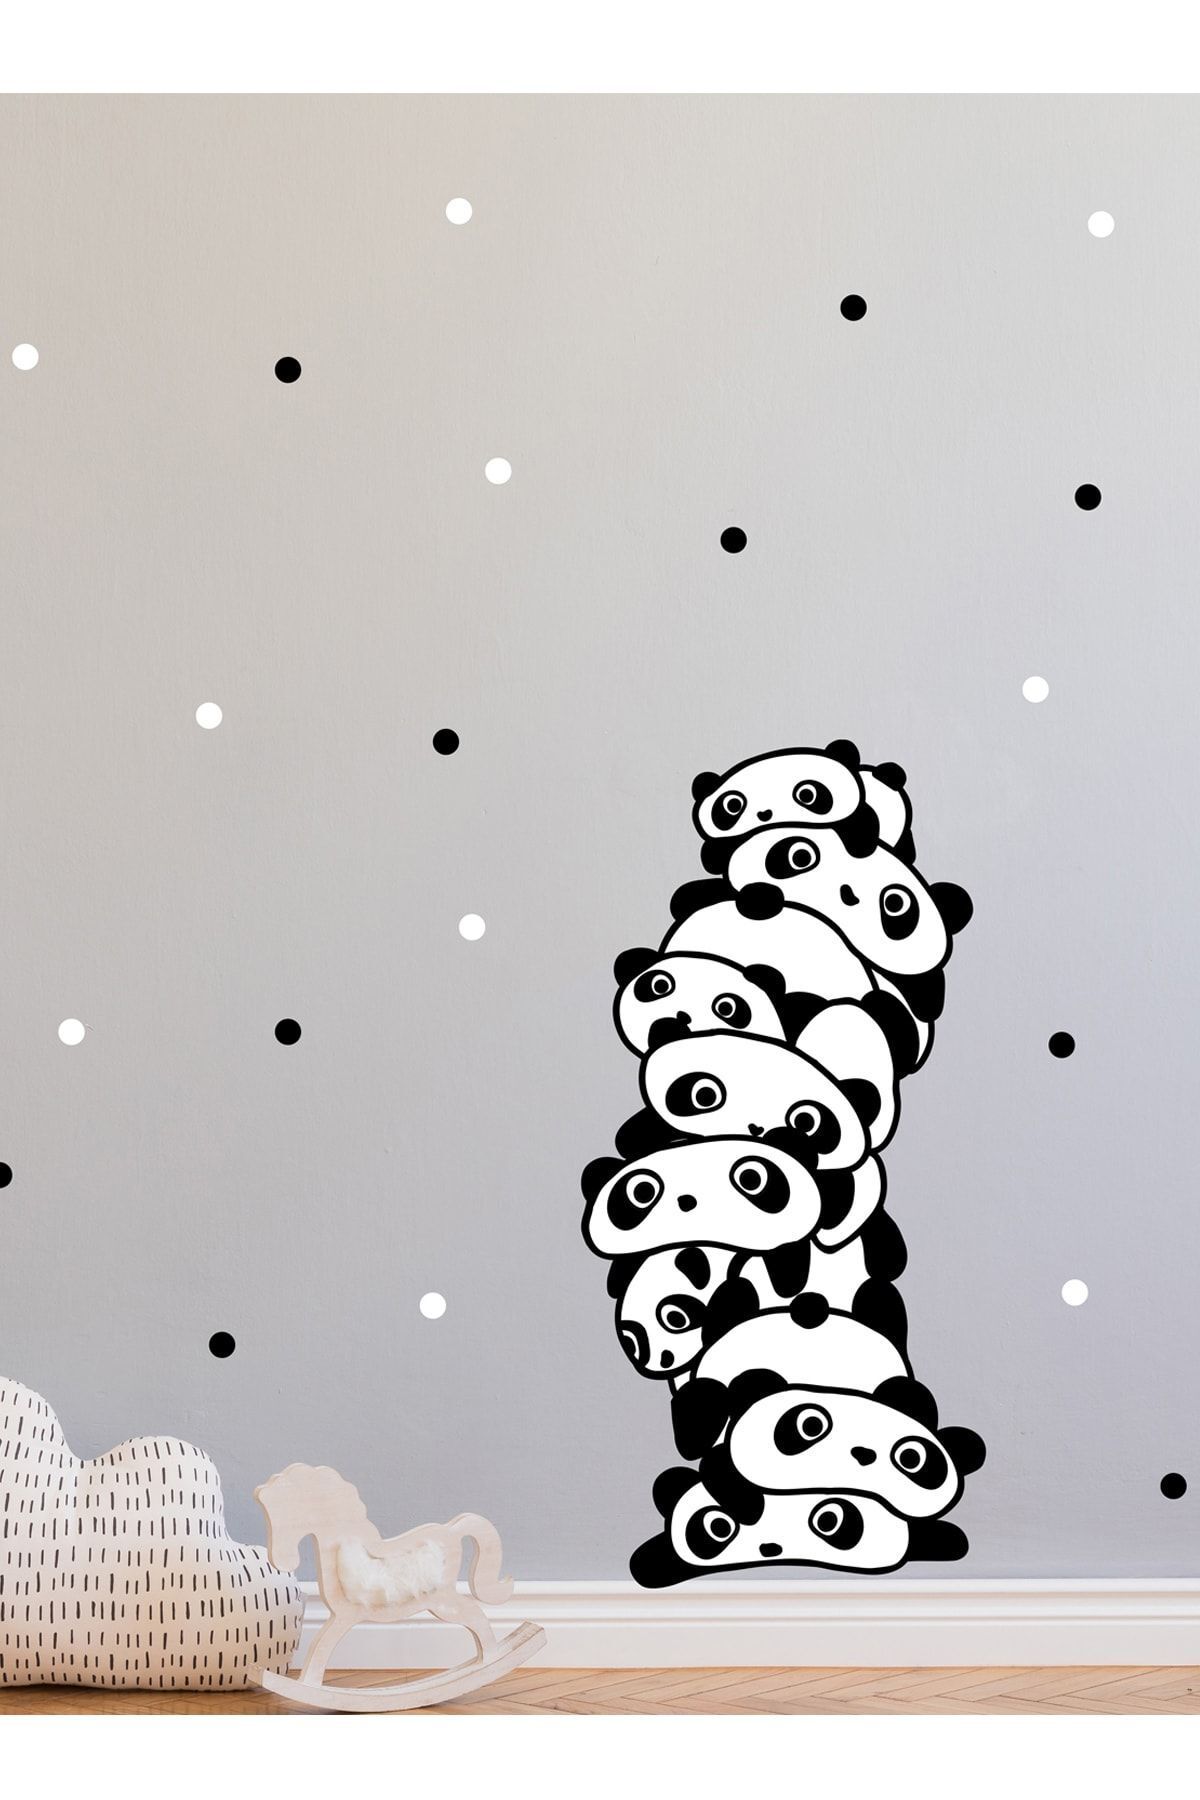 KanvasSepeti Üstüste Pandalar Duvar Sticker Seti